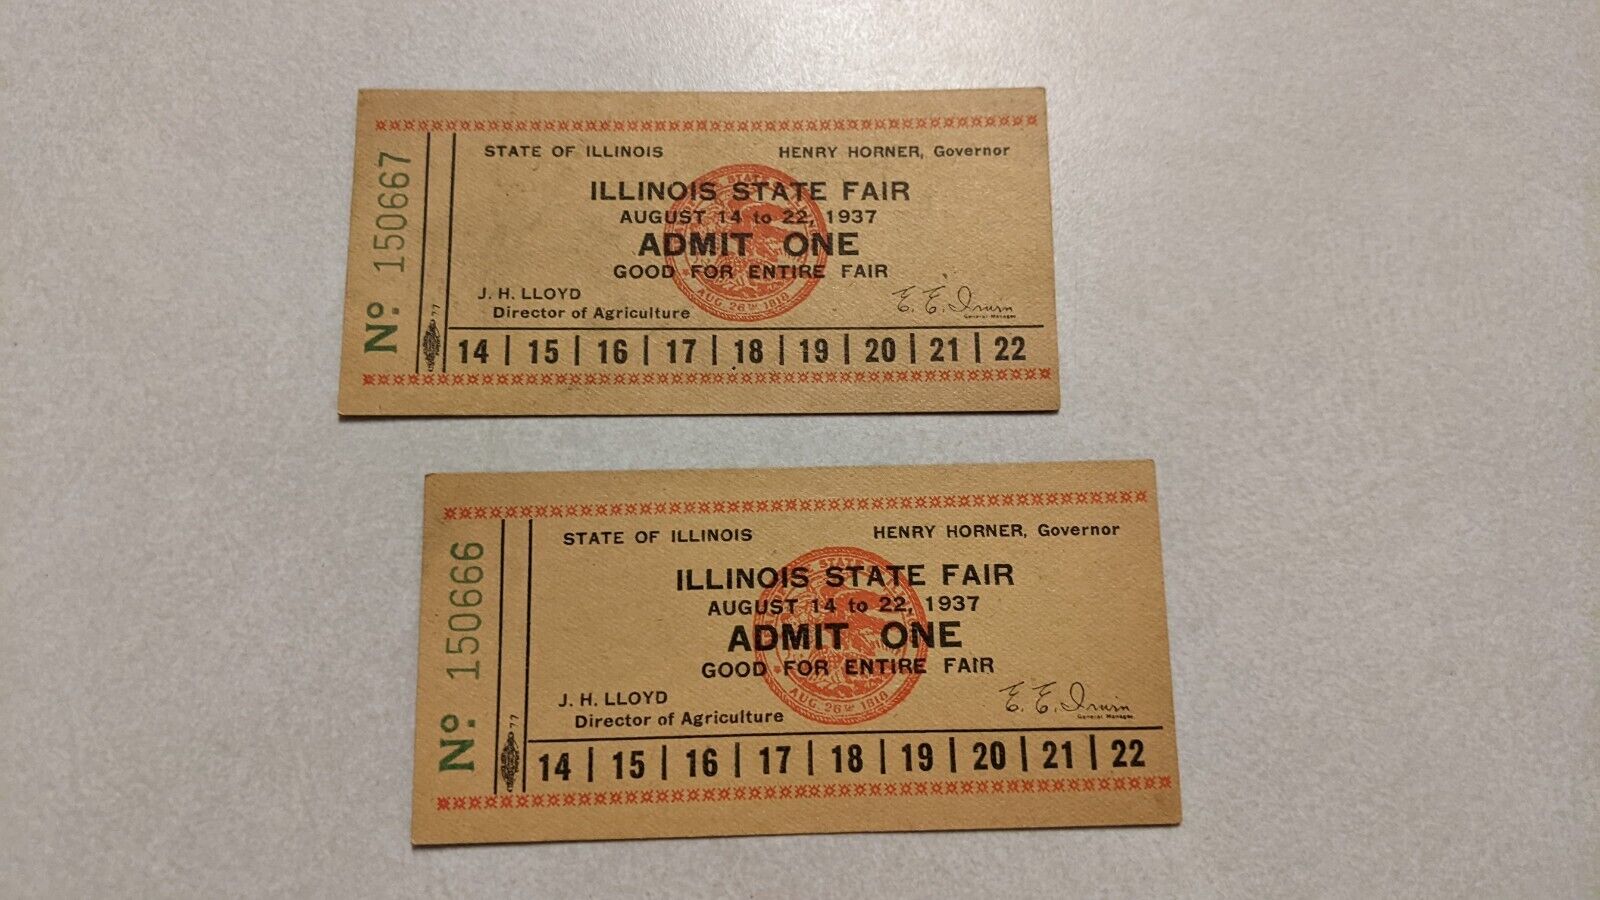 VINTAGE 1937 ILLINOIS STATE FAIR TICKET Pair - 2 Original Tickets